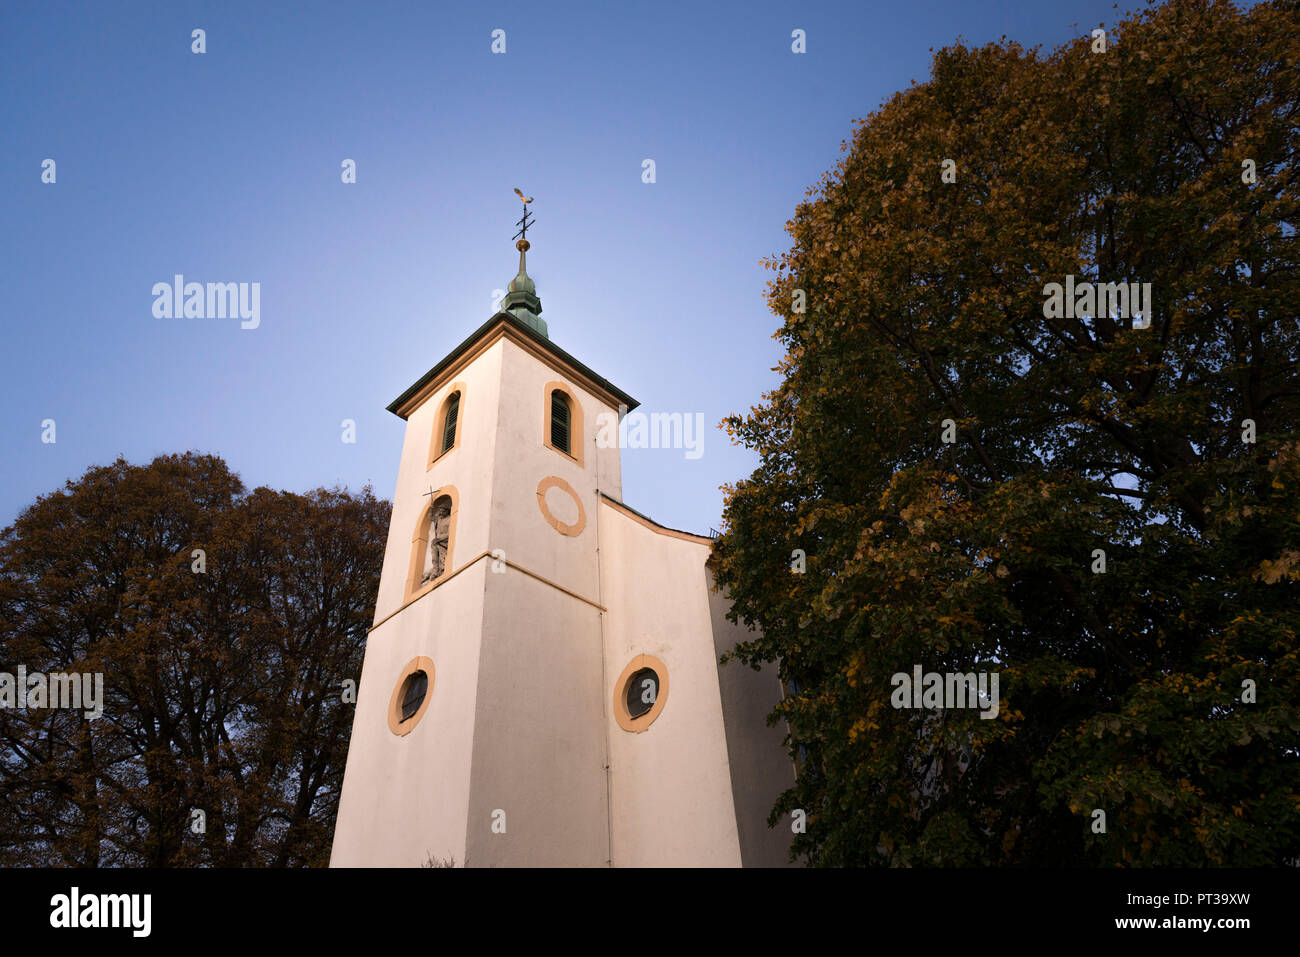 Germany, Baden-Württemberg, Kraichgau, Bruchsal-Untergrombach, Saint Michael's Chapel, baroque pilgrimage church on Michaelsberg Hill, western edge of hilly Kraichgau Region, Stock Photo